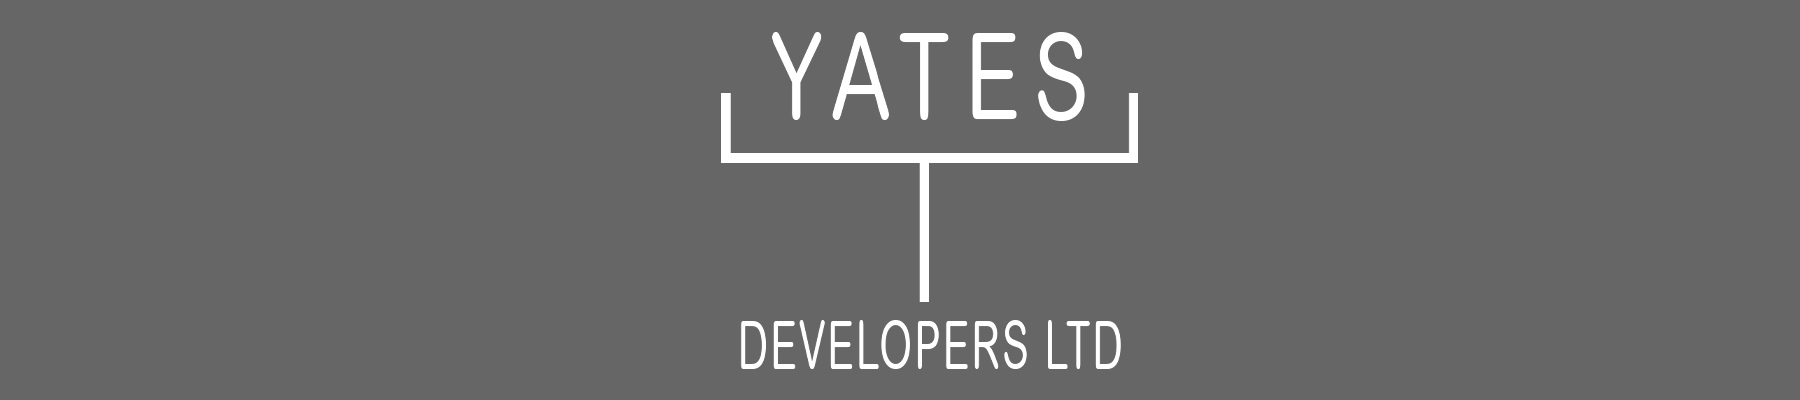 Yates Developers Ltd